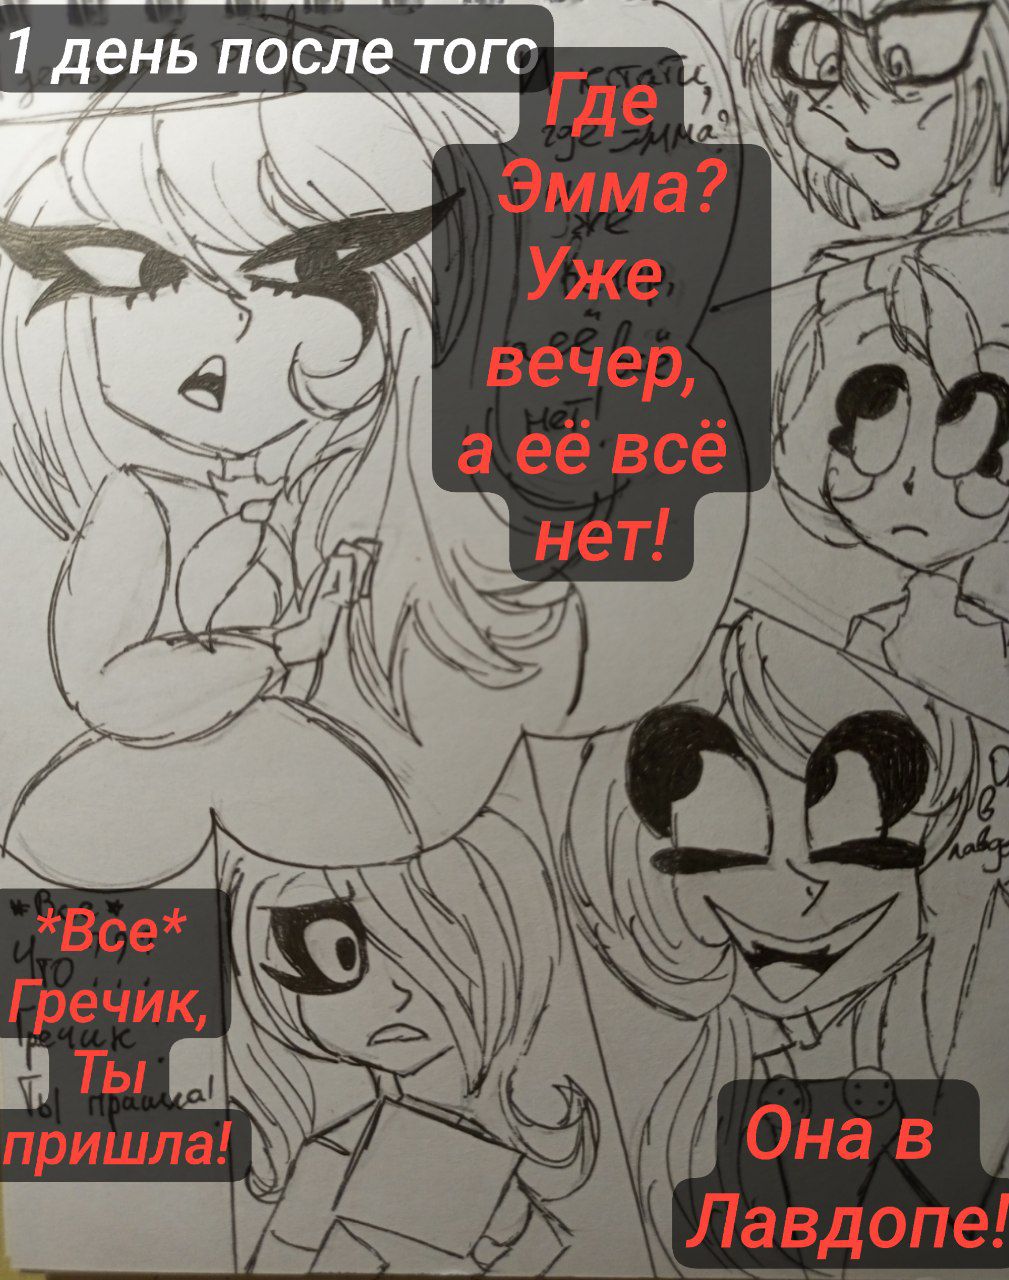 Комикс Душа Подушки "Все в Лавдоп!": выпуск №2